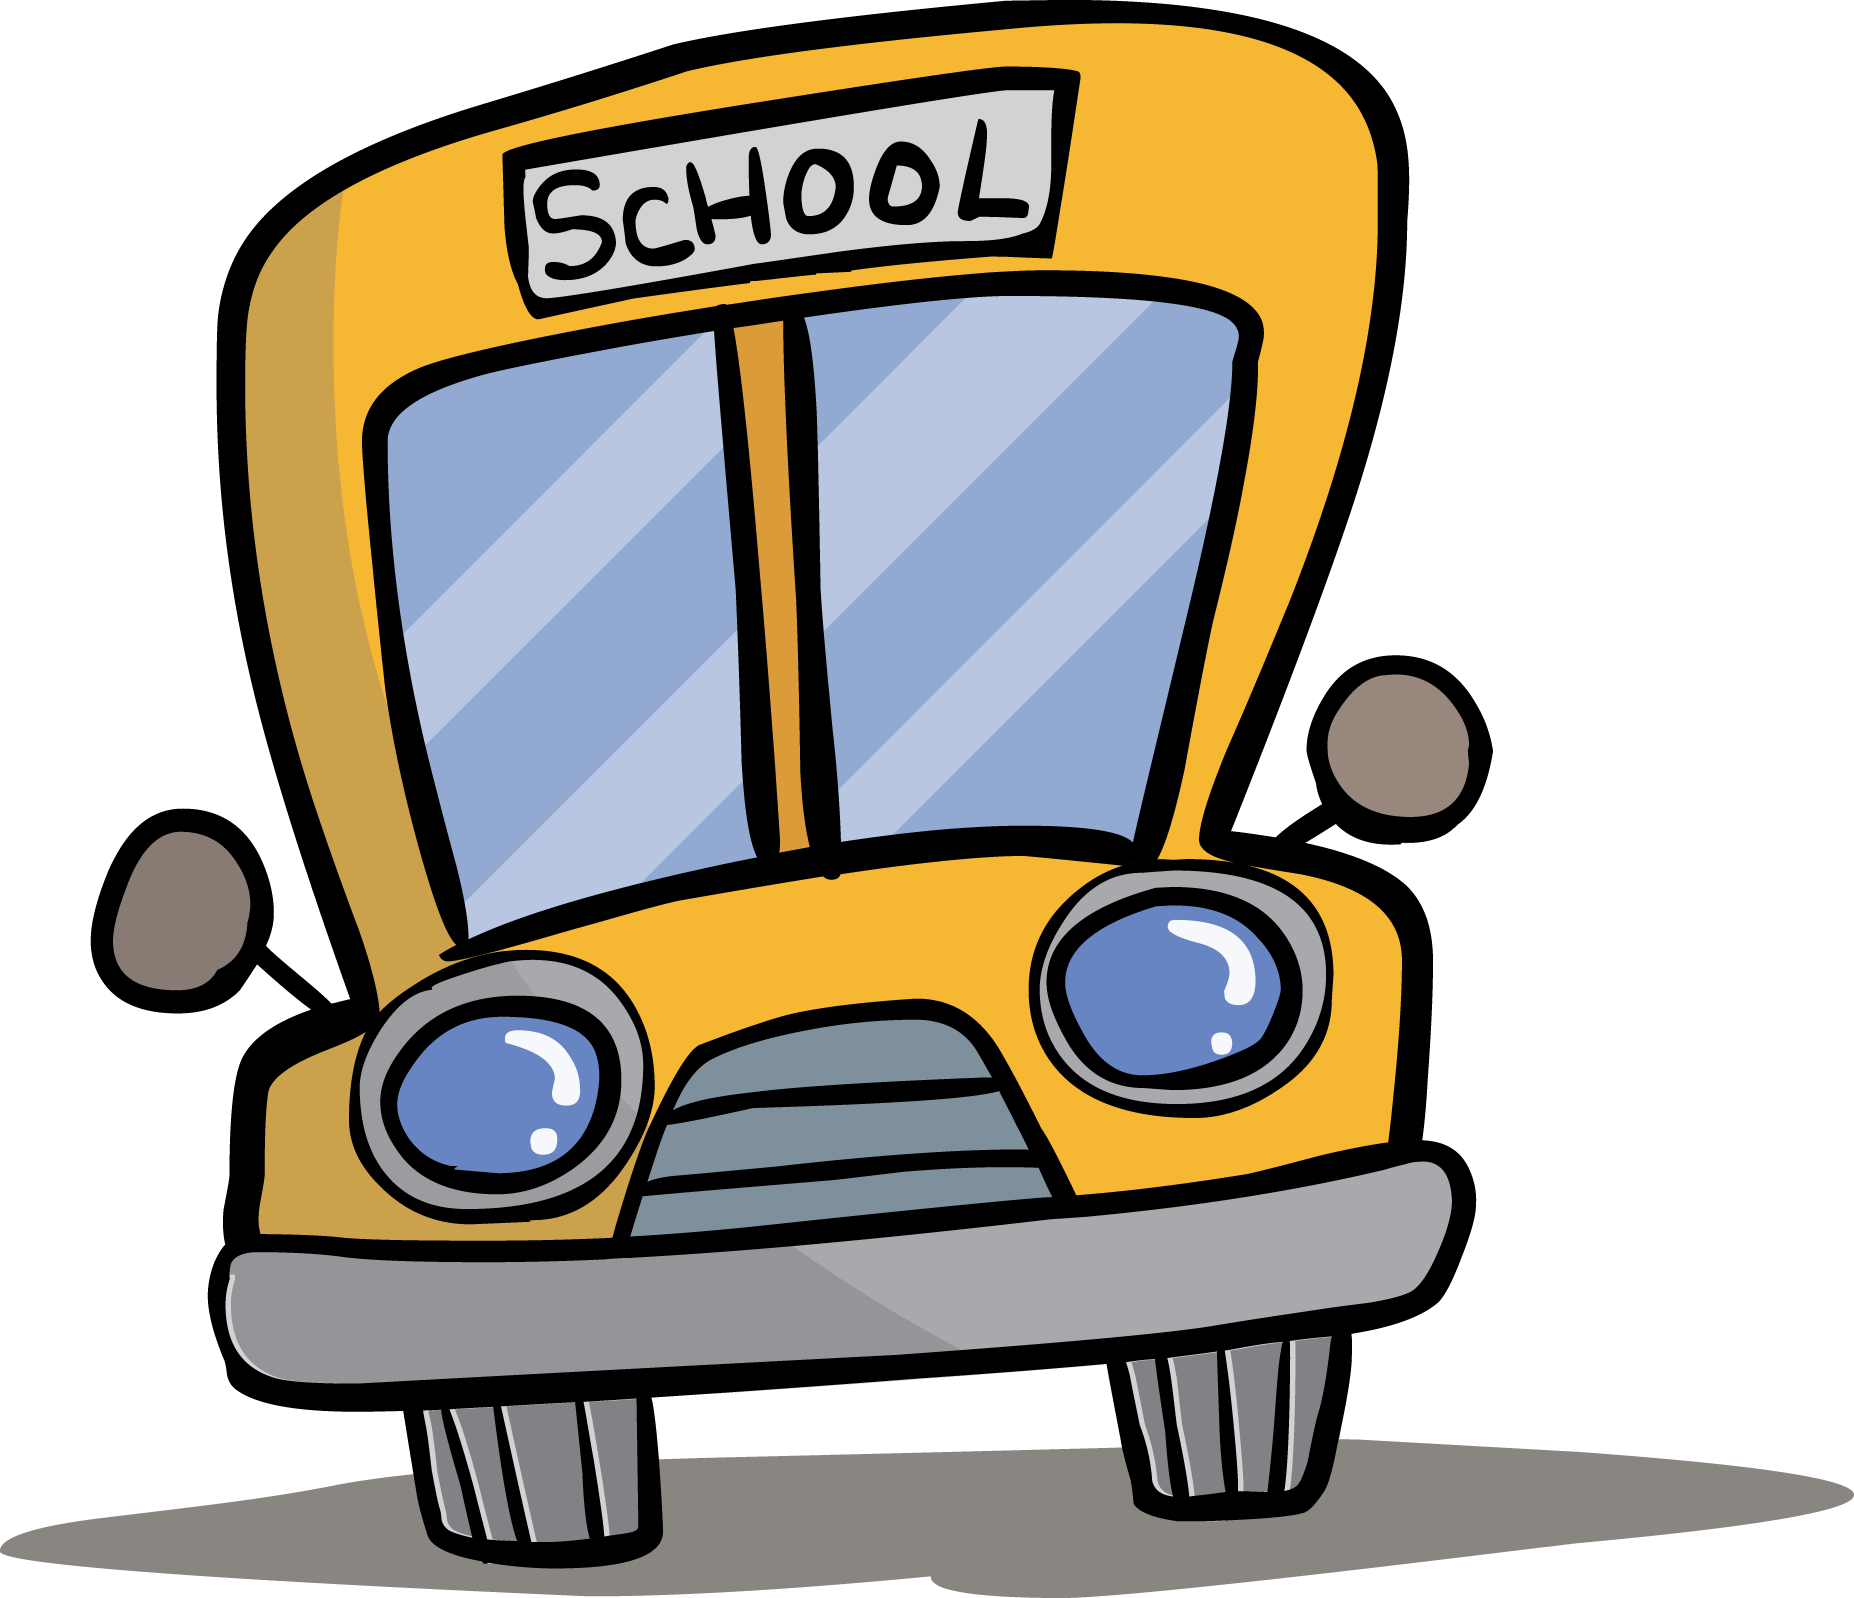 Image of school bus. Screwdriver clipart cartoon